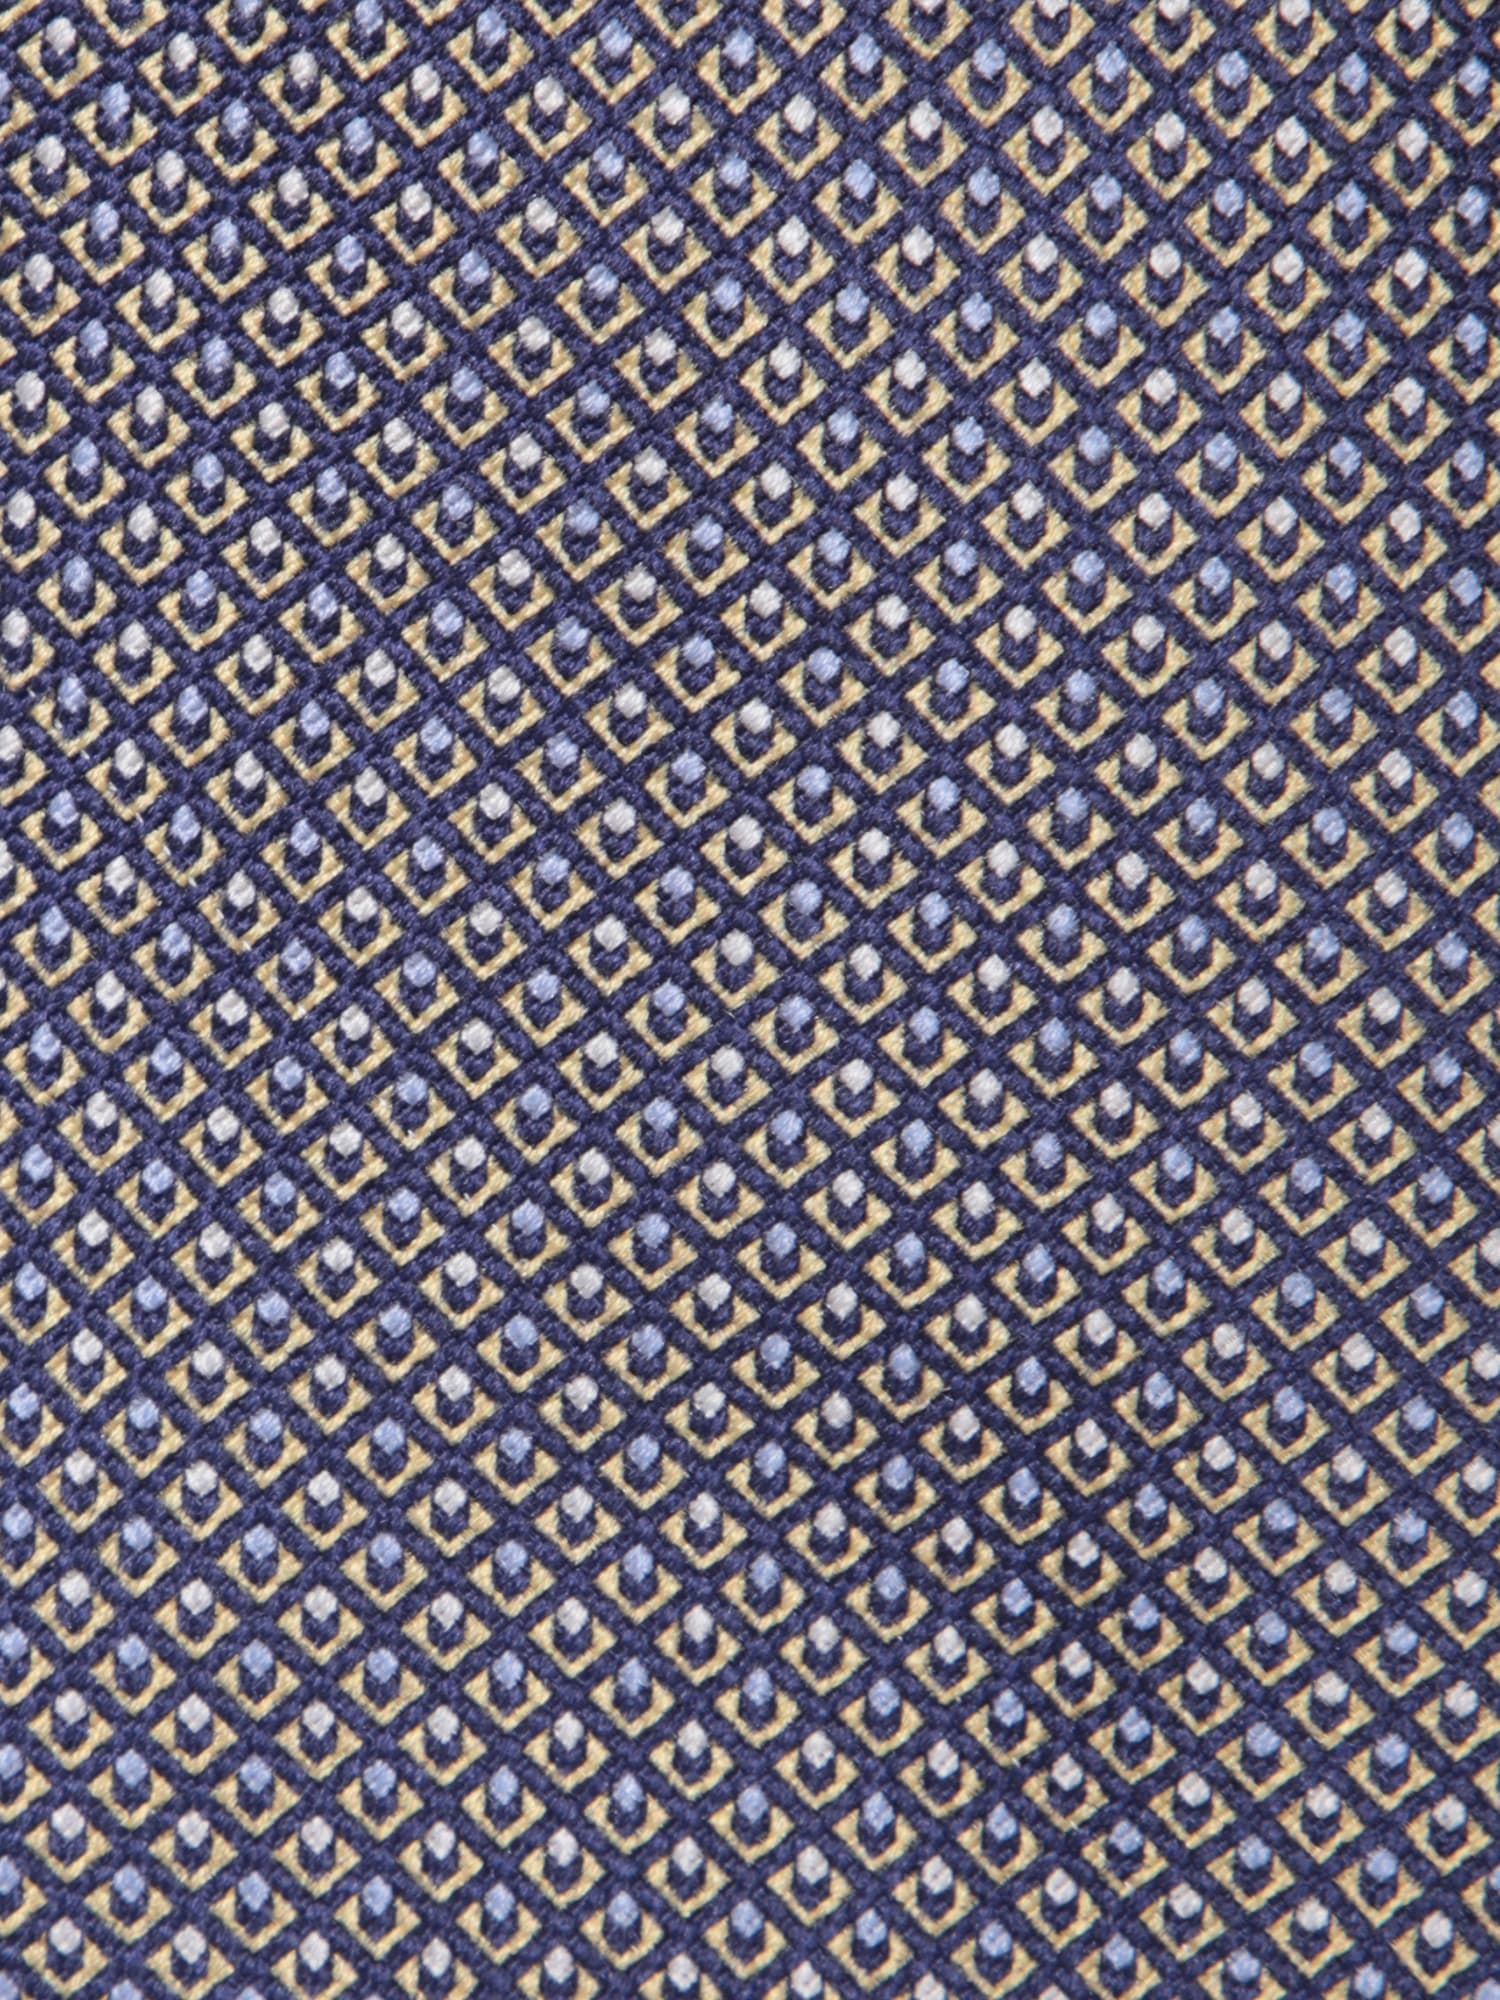 Shop Brioni Micropattern Blue/white Tie